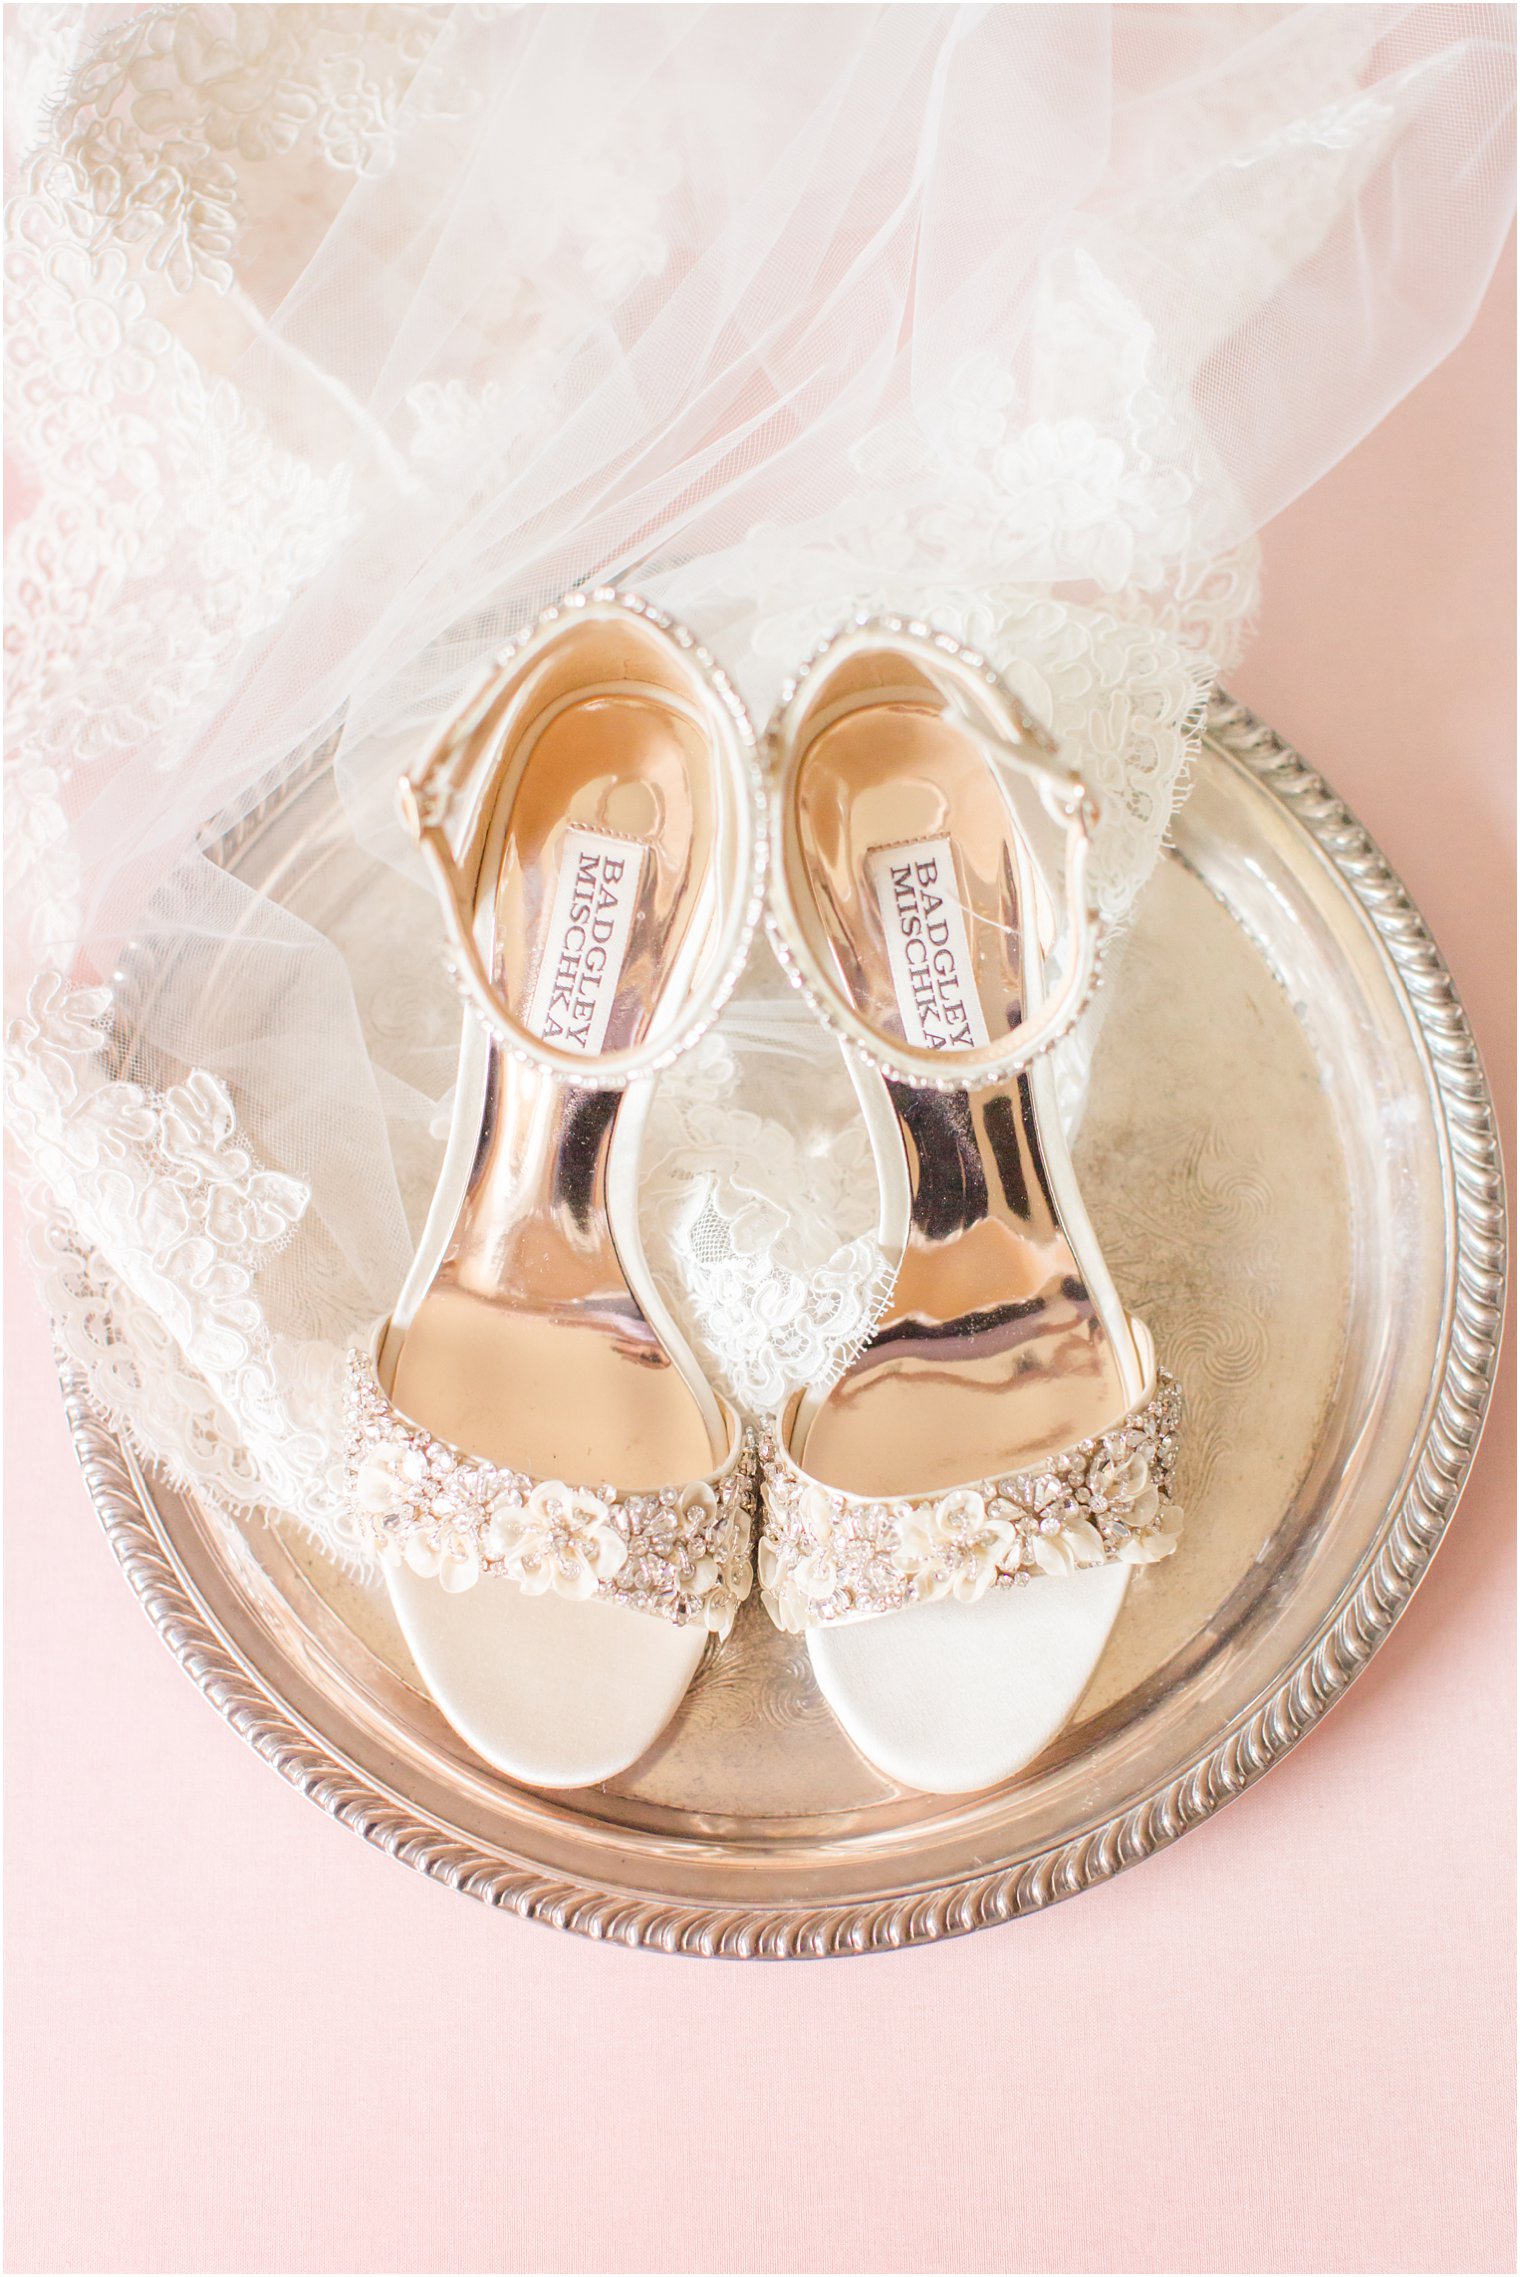 wedding shoes by Badgley Mischka 